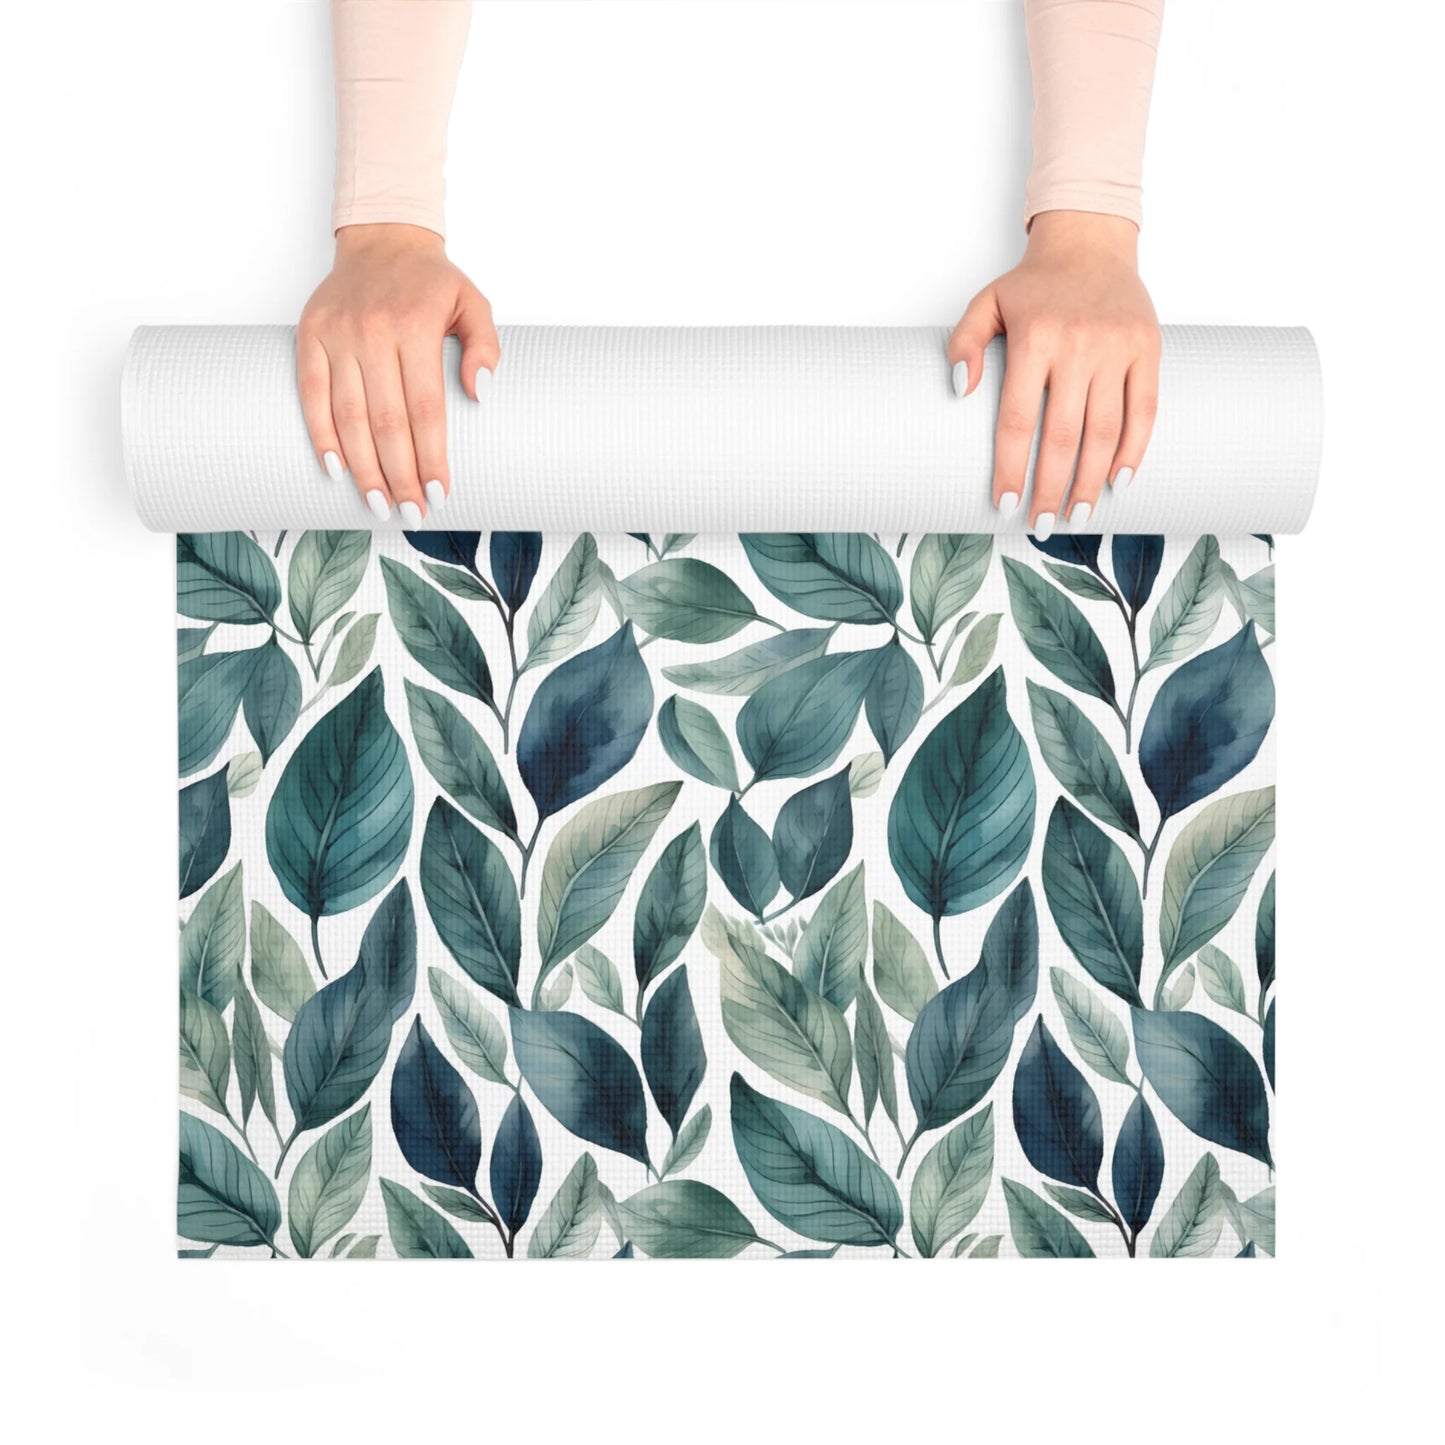 Sleek Foliage Foam Yoga Mat